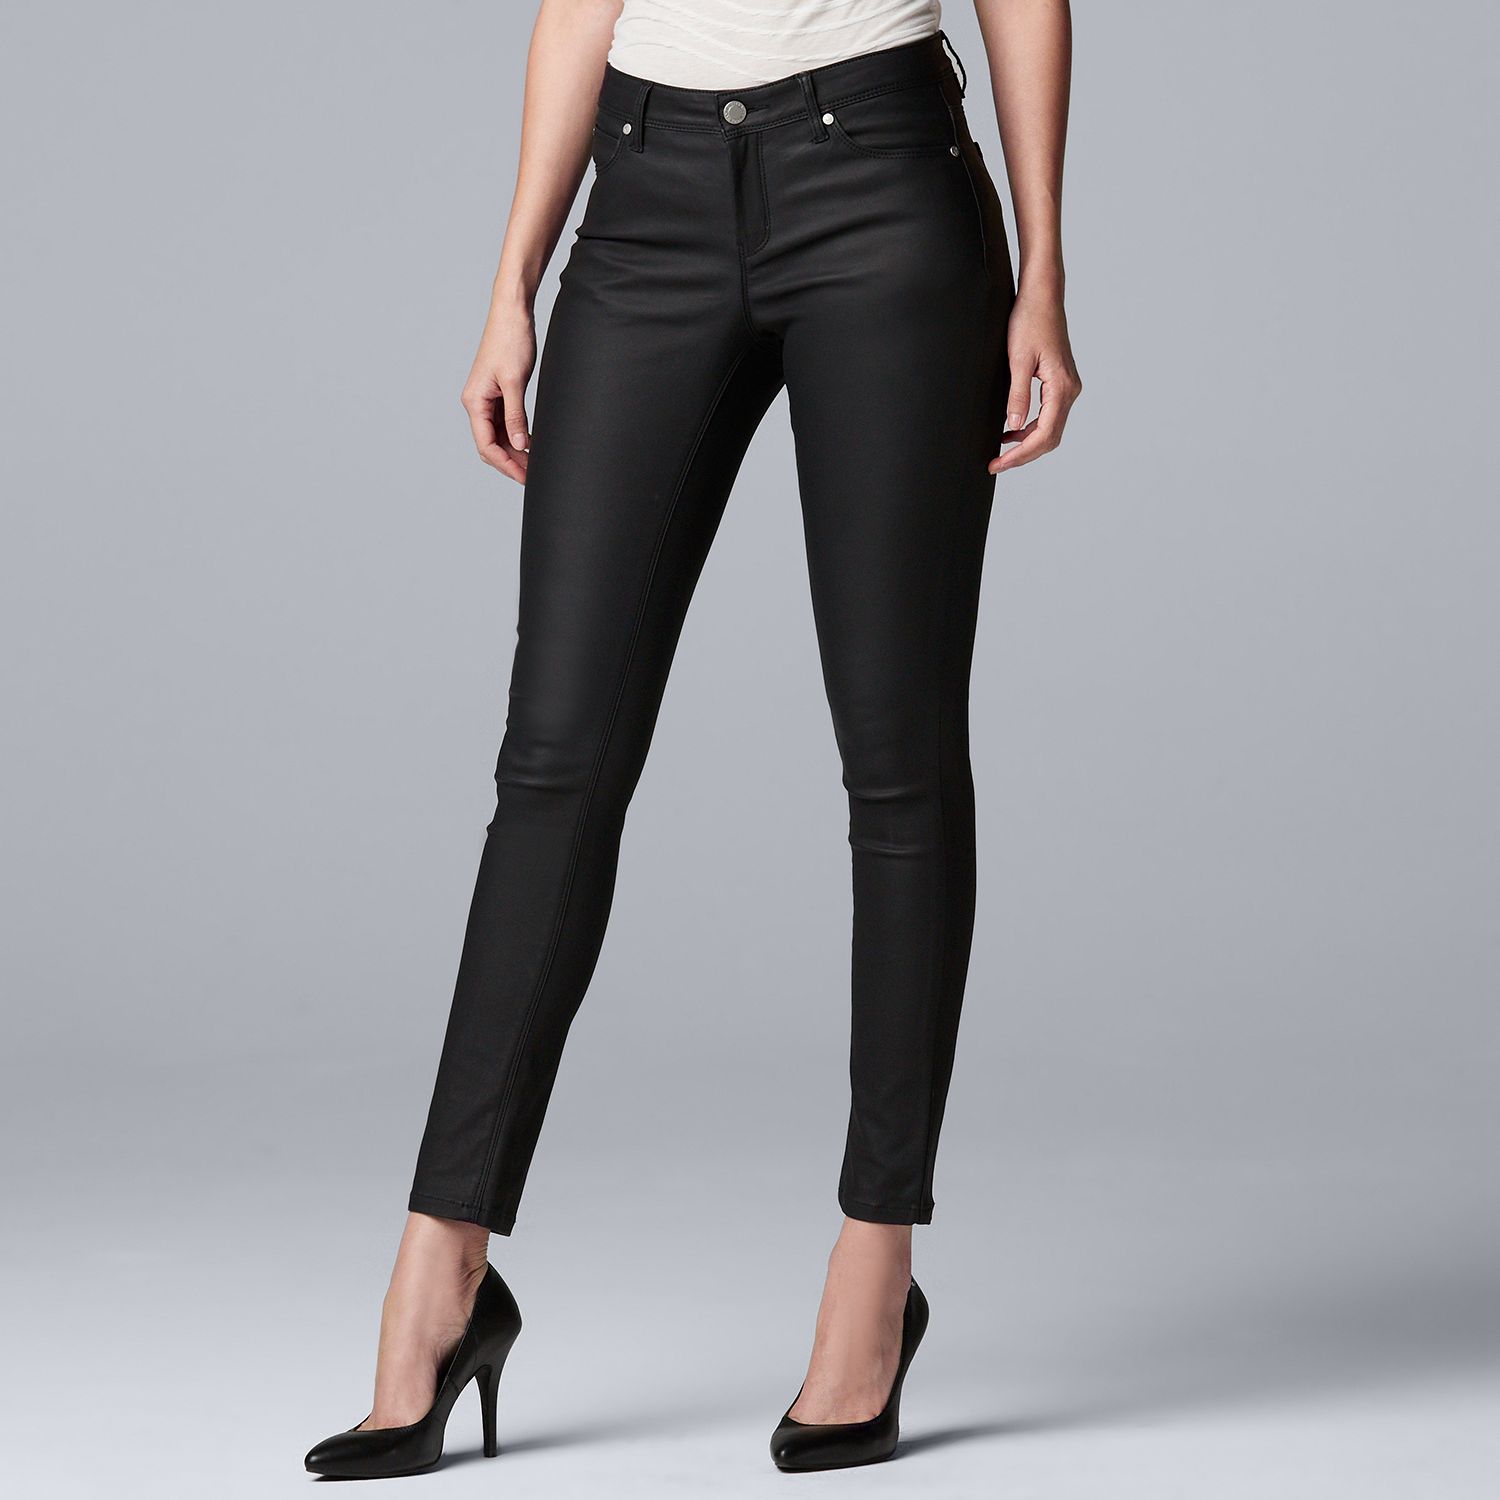 coated black jeans women's